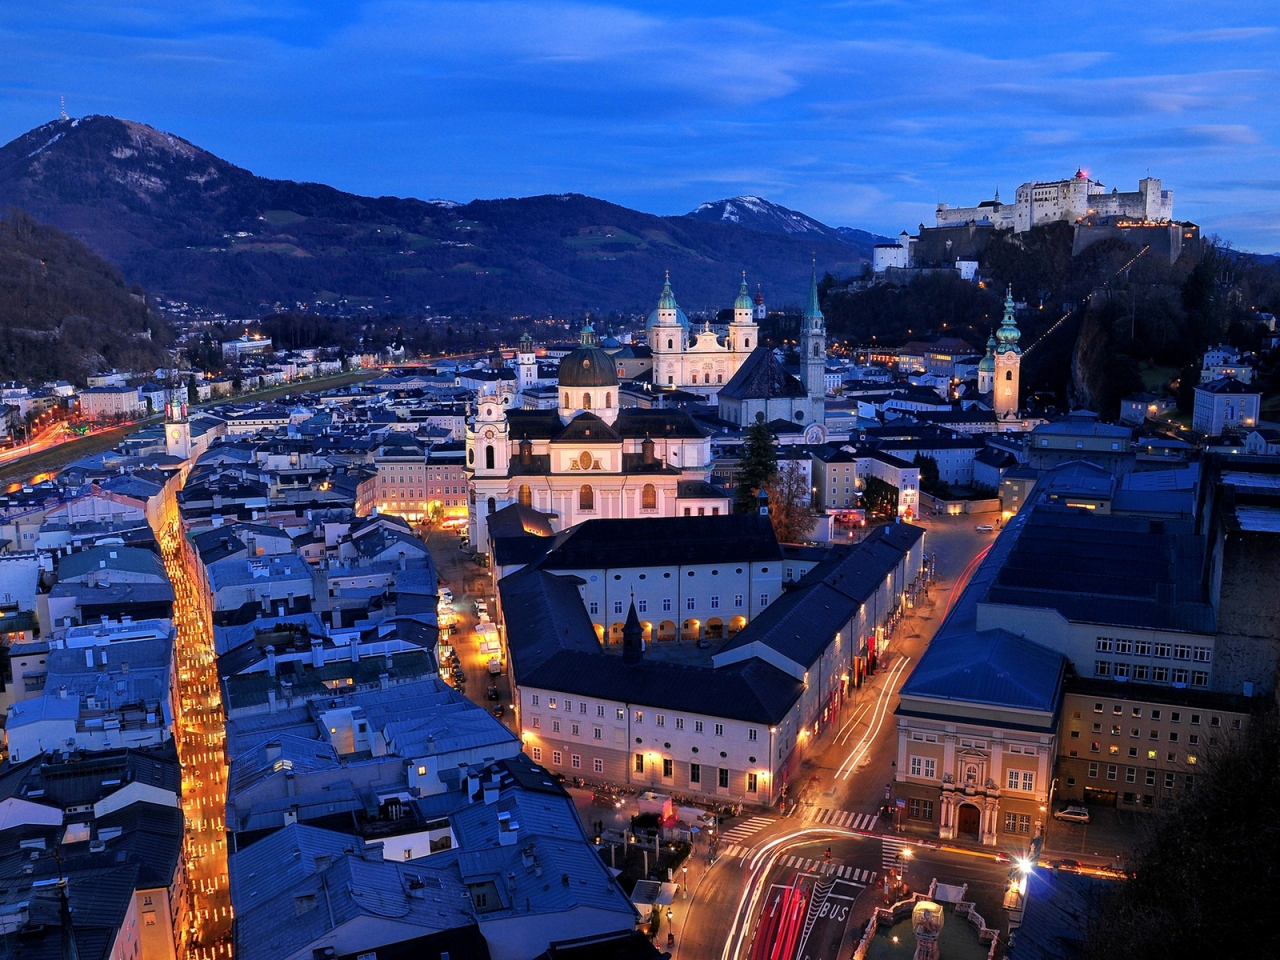 Salzburg Night for 1280 x 960 resolution